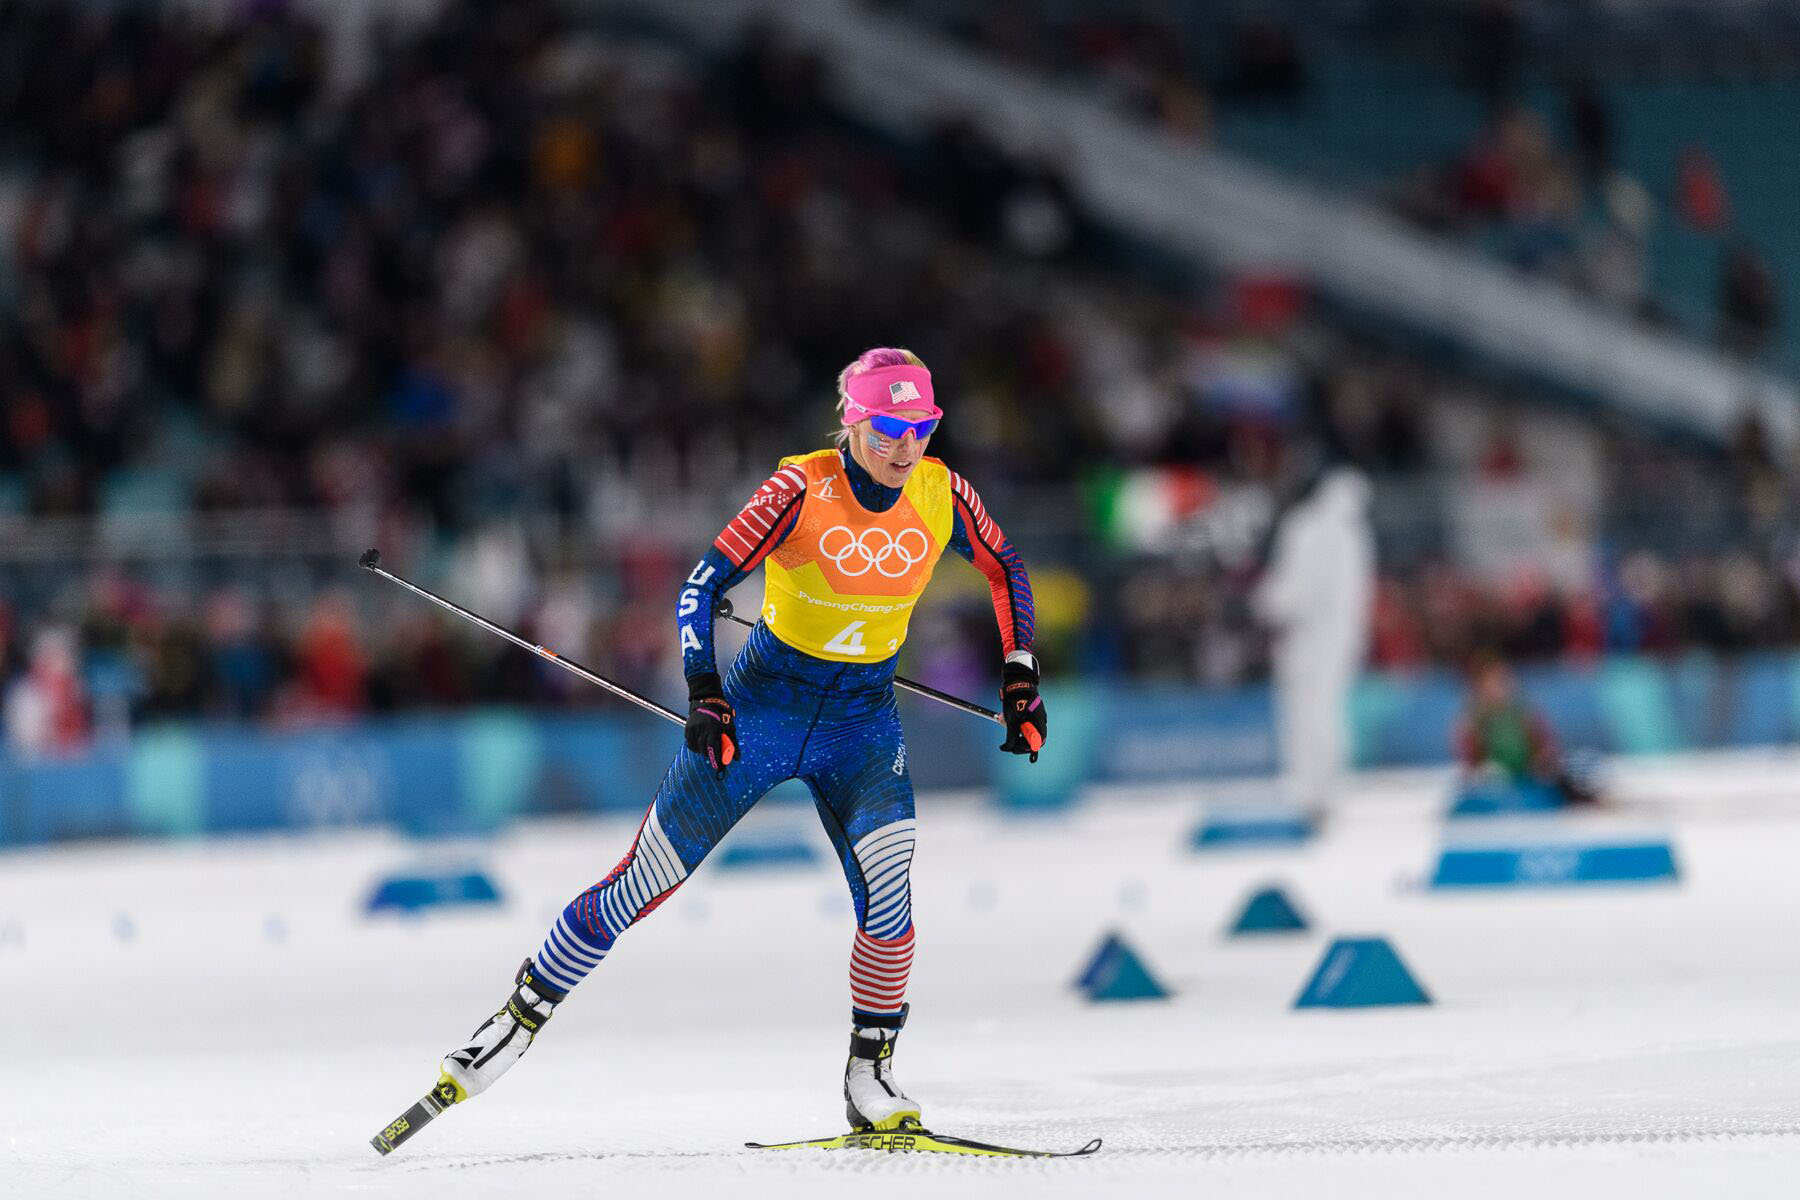 Kikkan Randall in the Womens XC Relay at the 2018 Winter Olympics in Pyeongchang, South Korea.